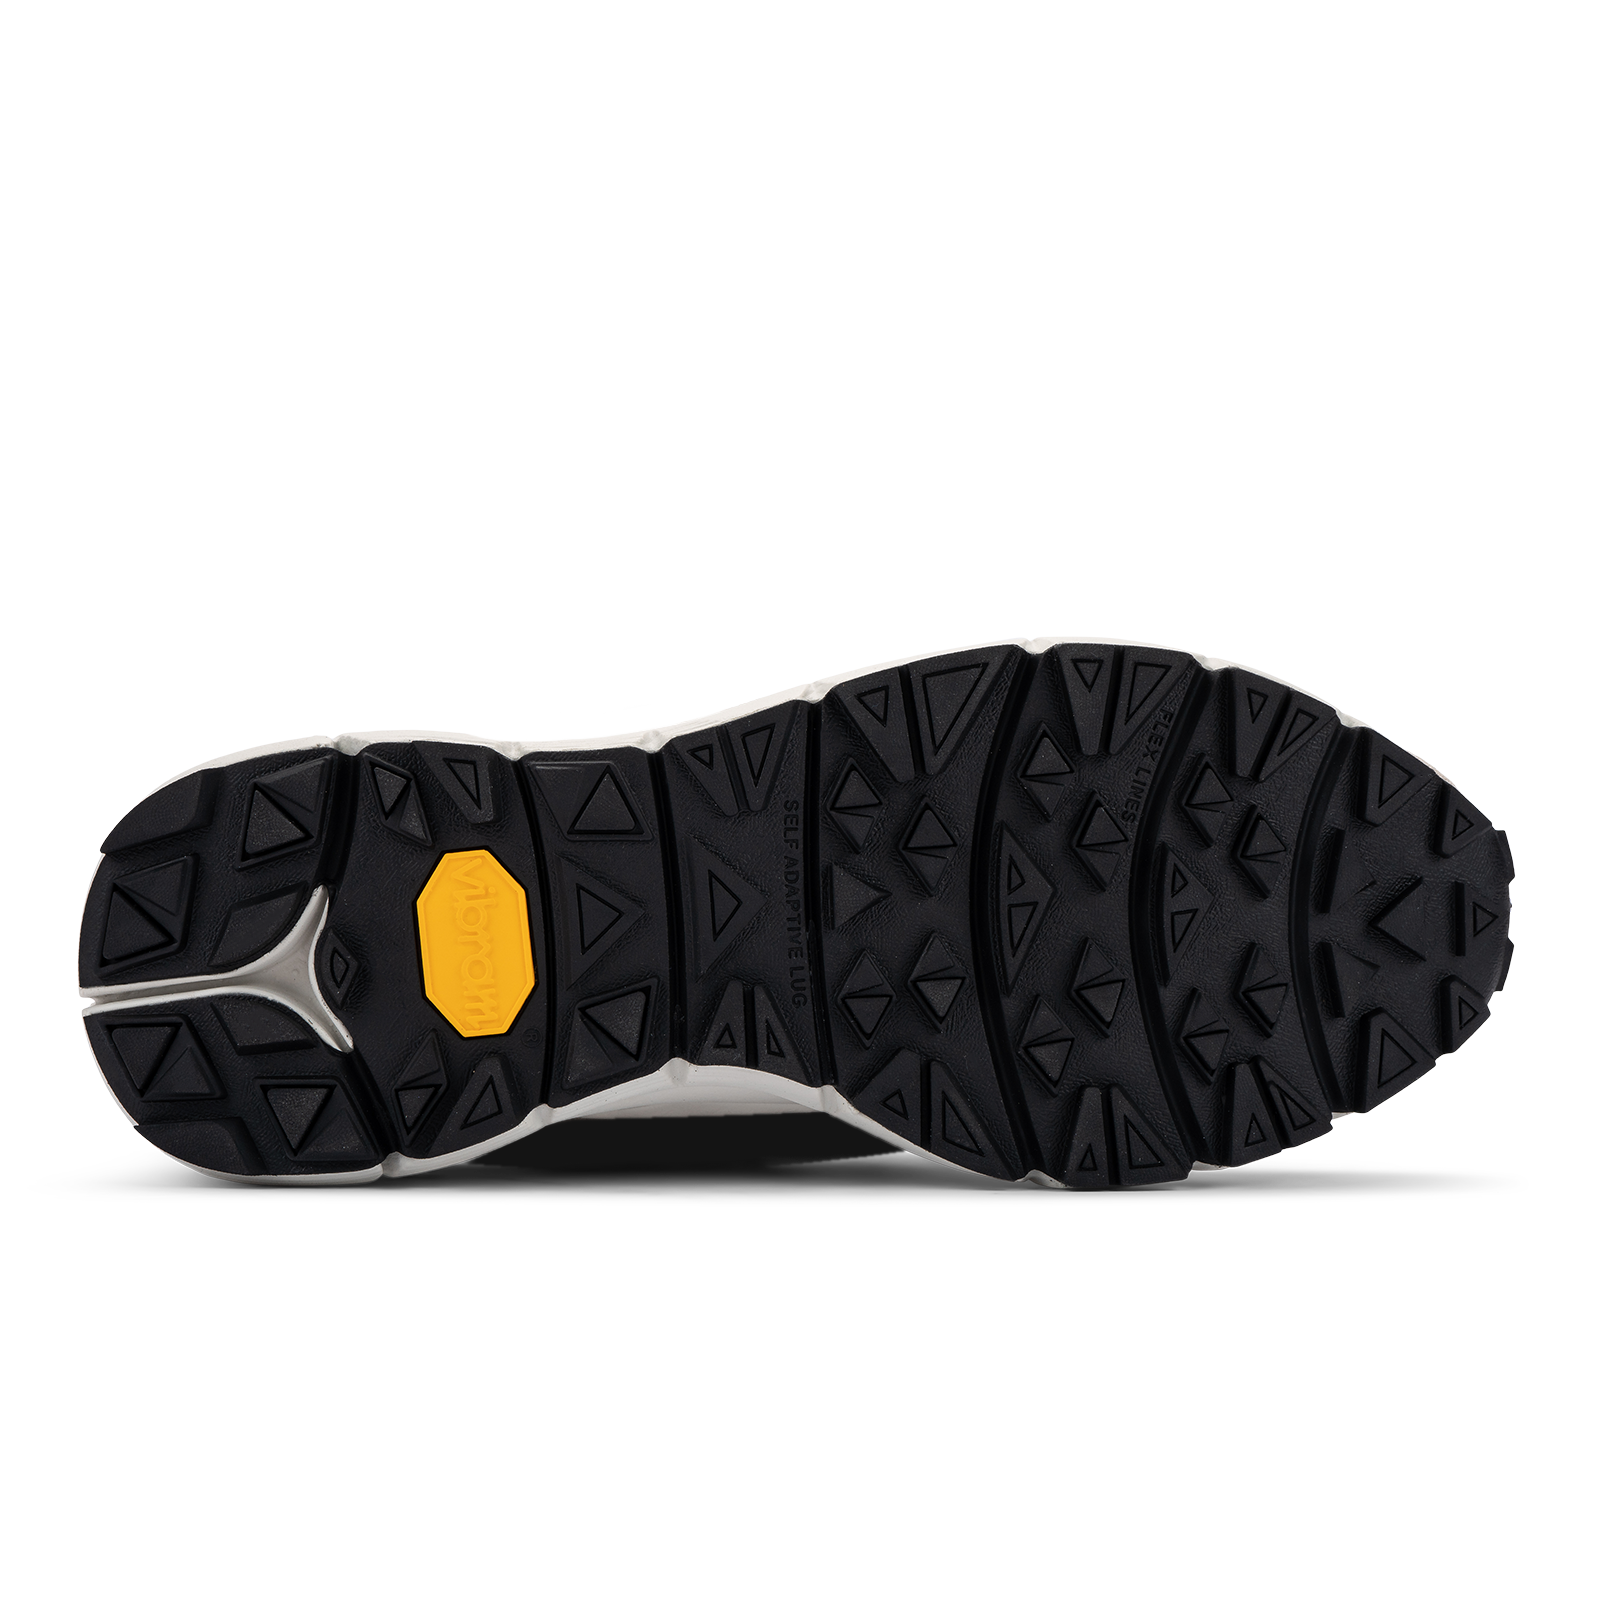 vibram self adaptive rubber lug technology. Black outsole white midsole yellow vibram crest logo